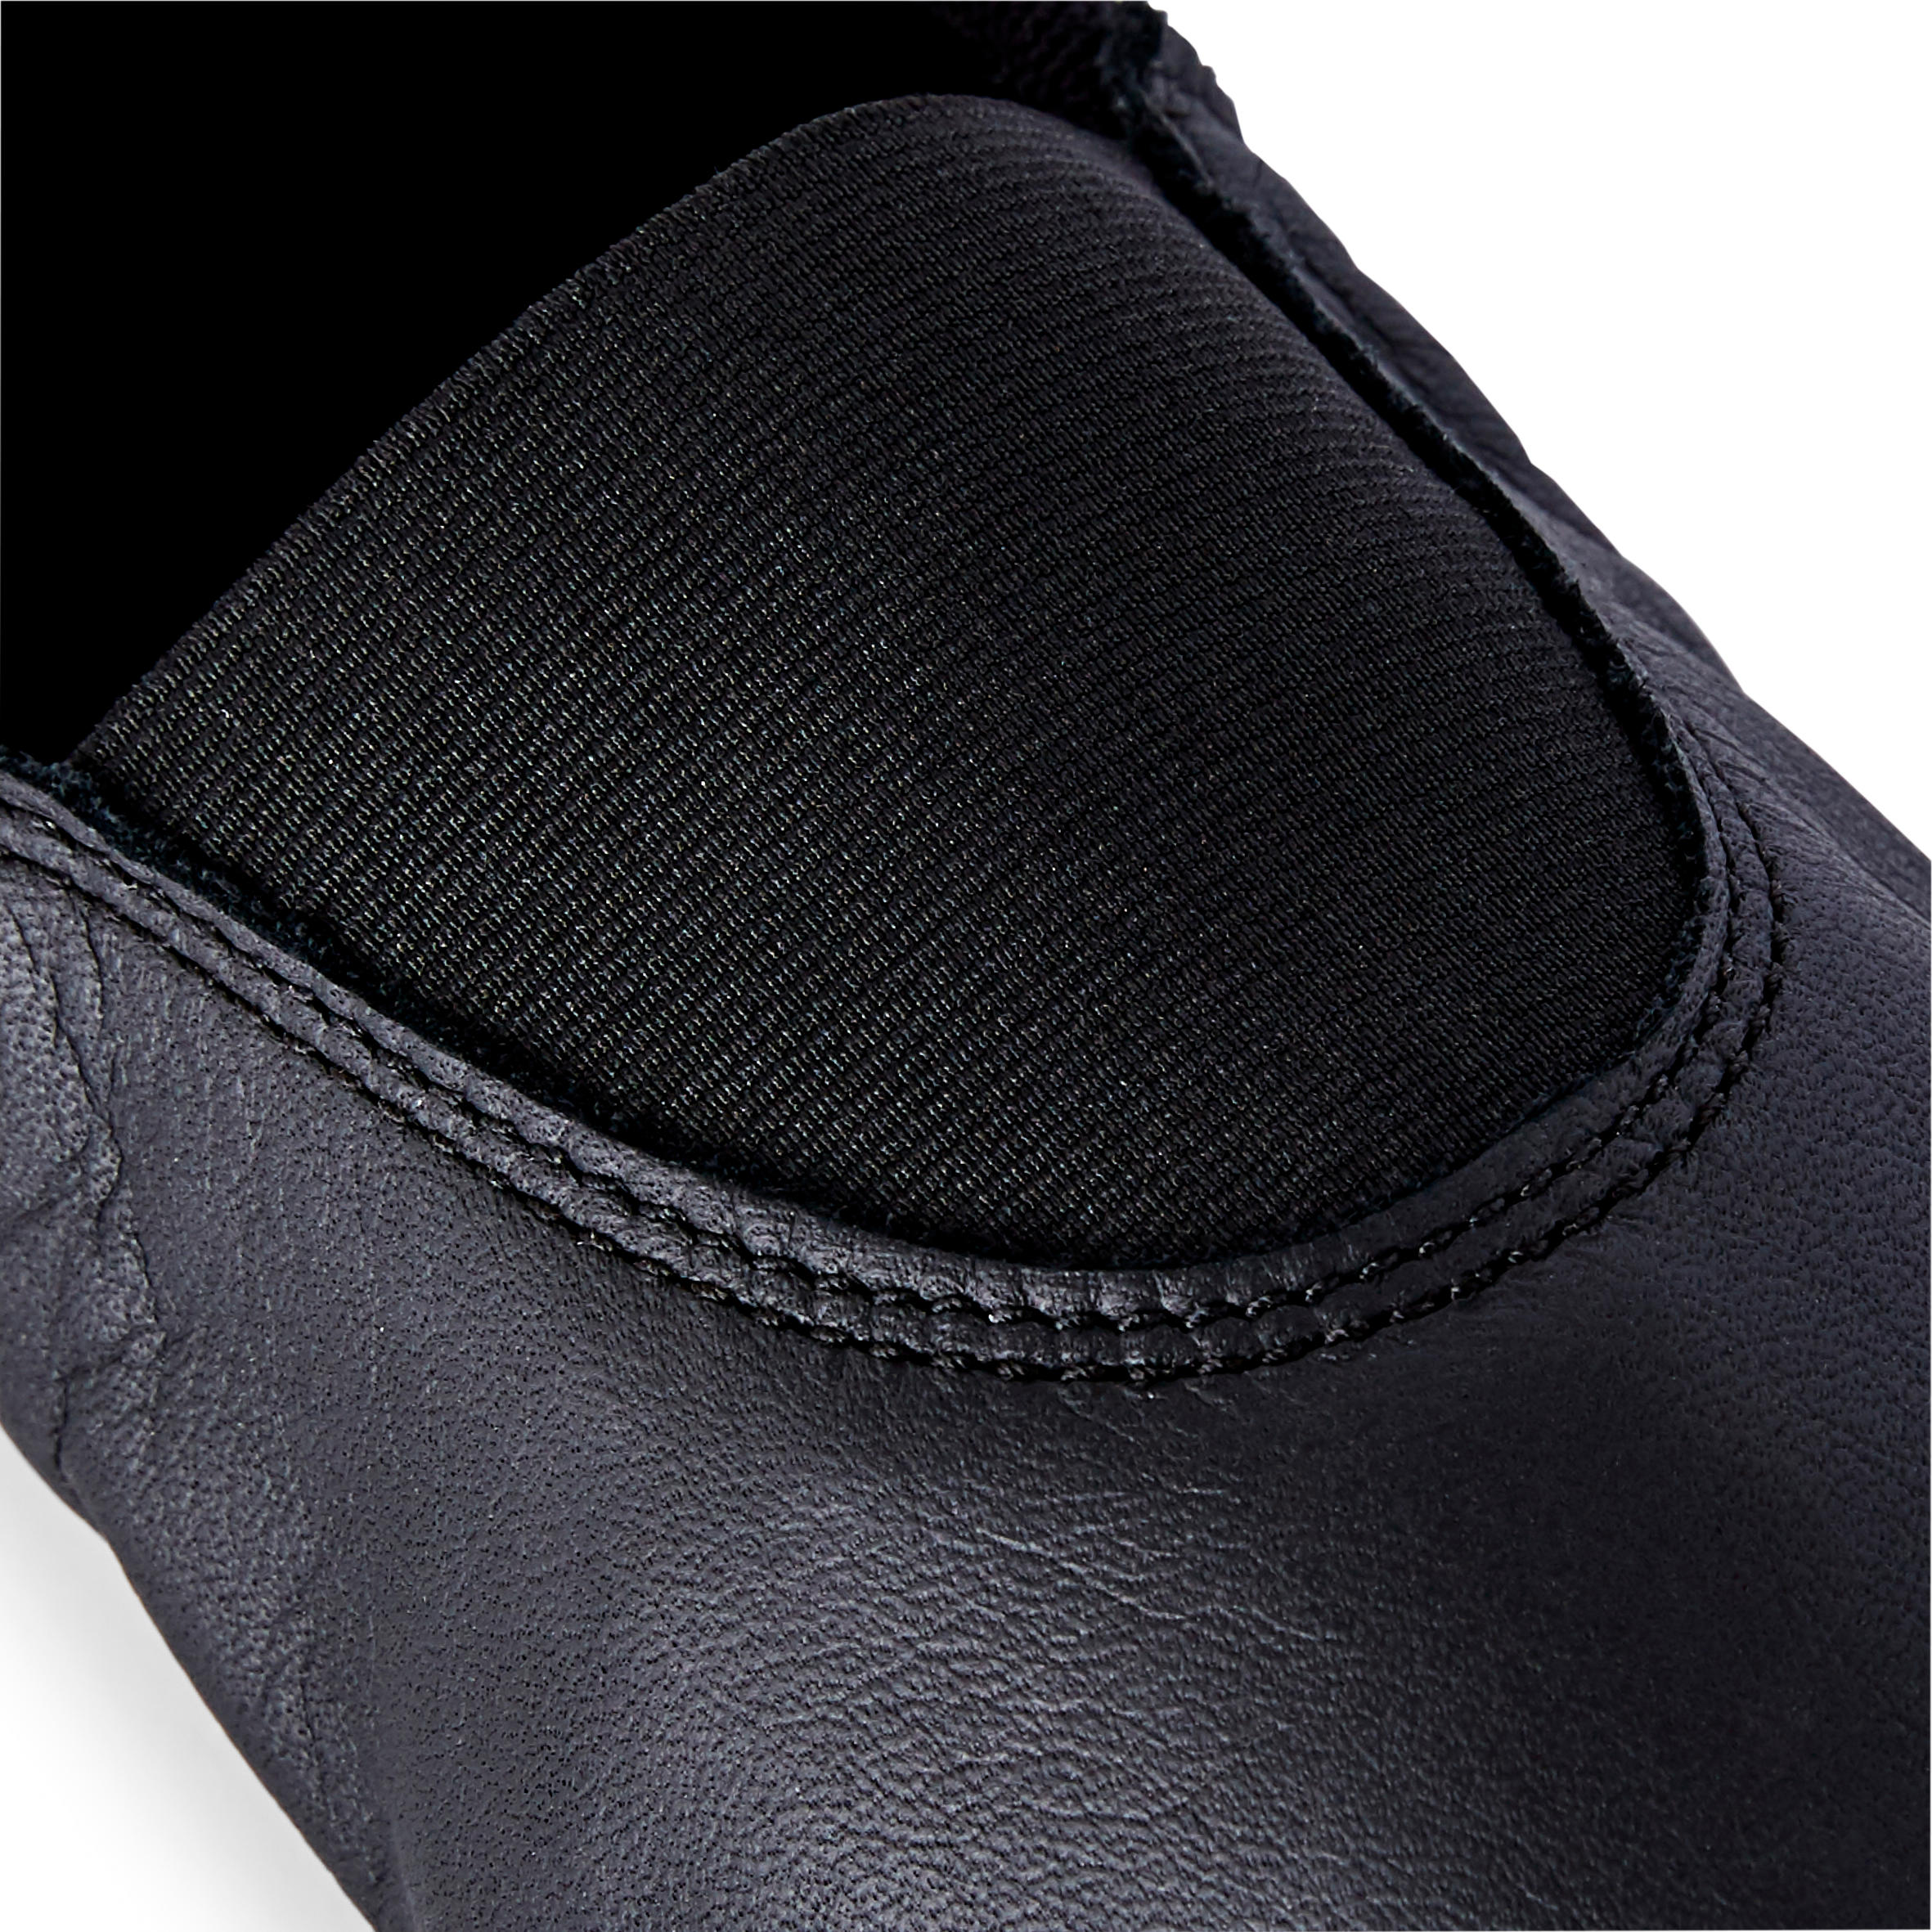 Modern Jazz Supple Leather Shoes - Black 3/5